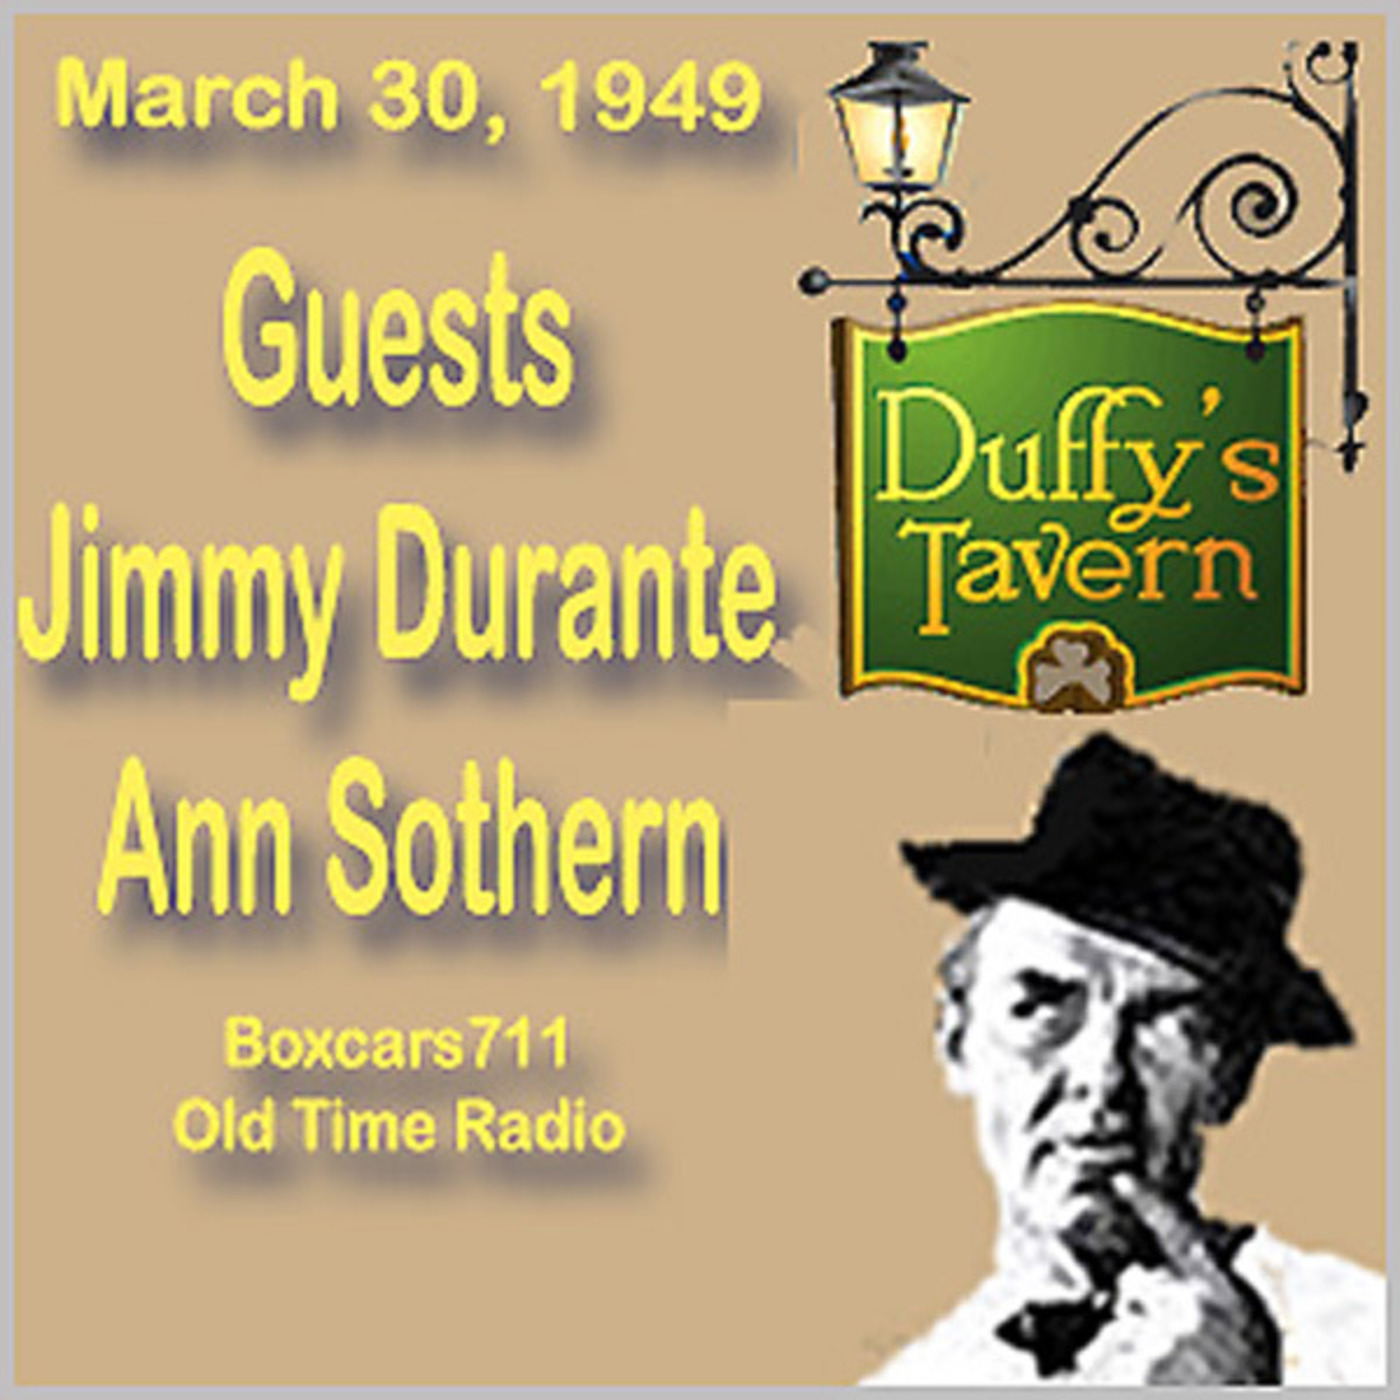 Episode 9668: Duffy's Tavern - 